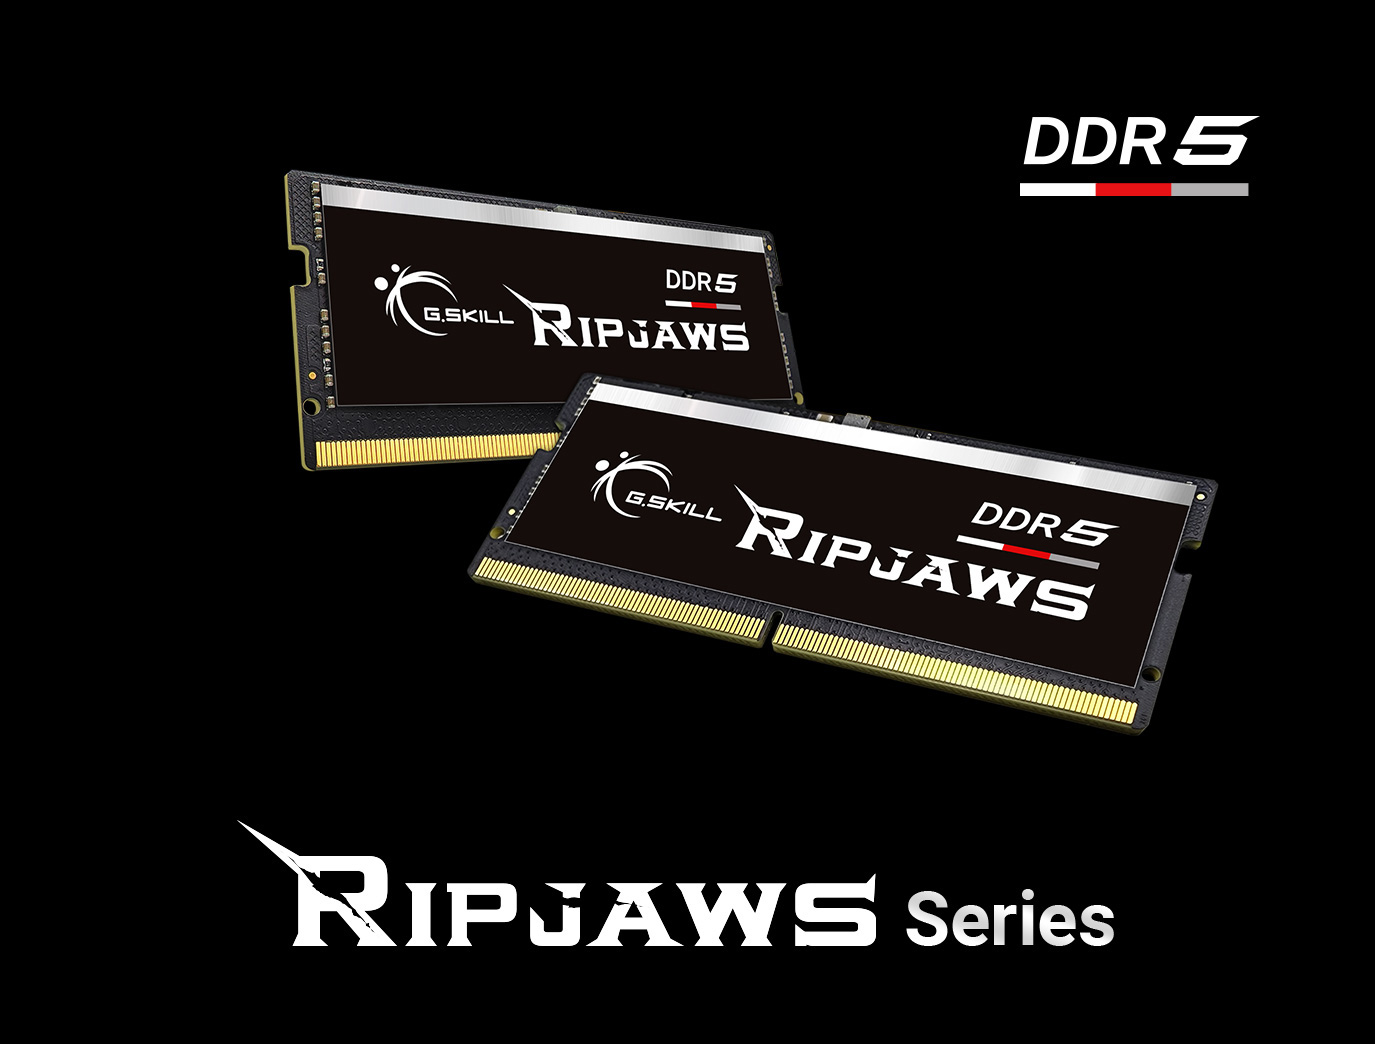 Ripjaws DDR5 SO-DIMM memory kit